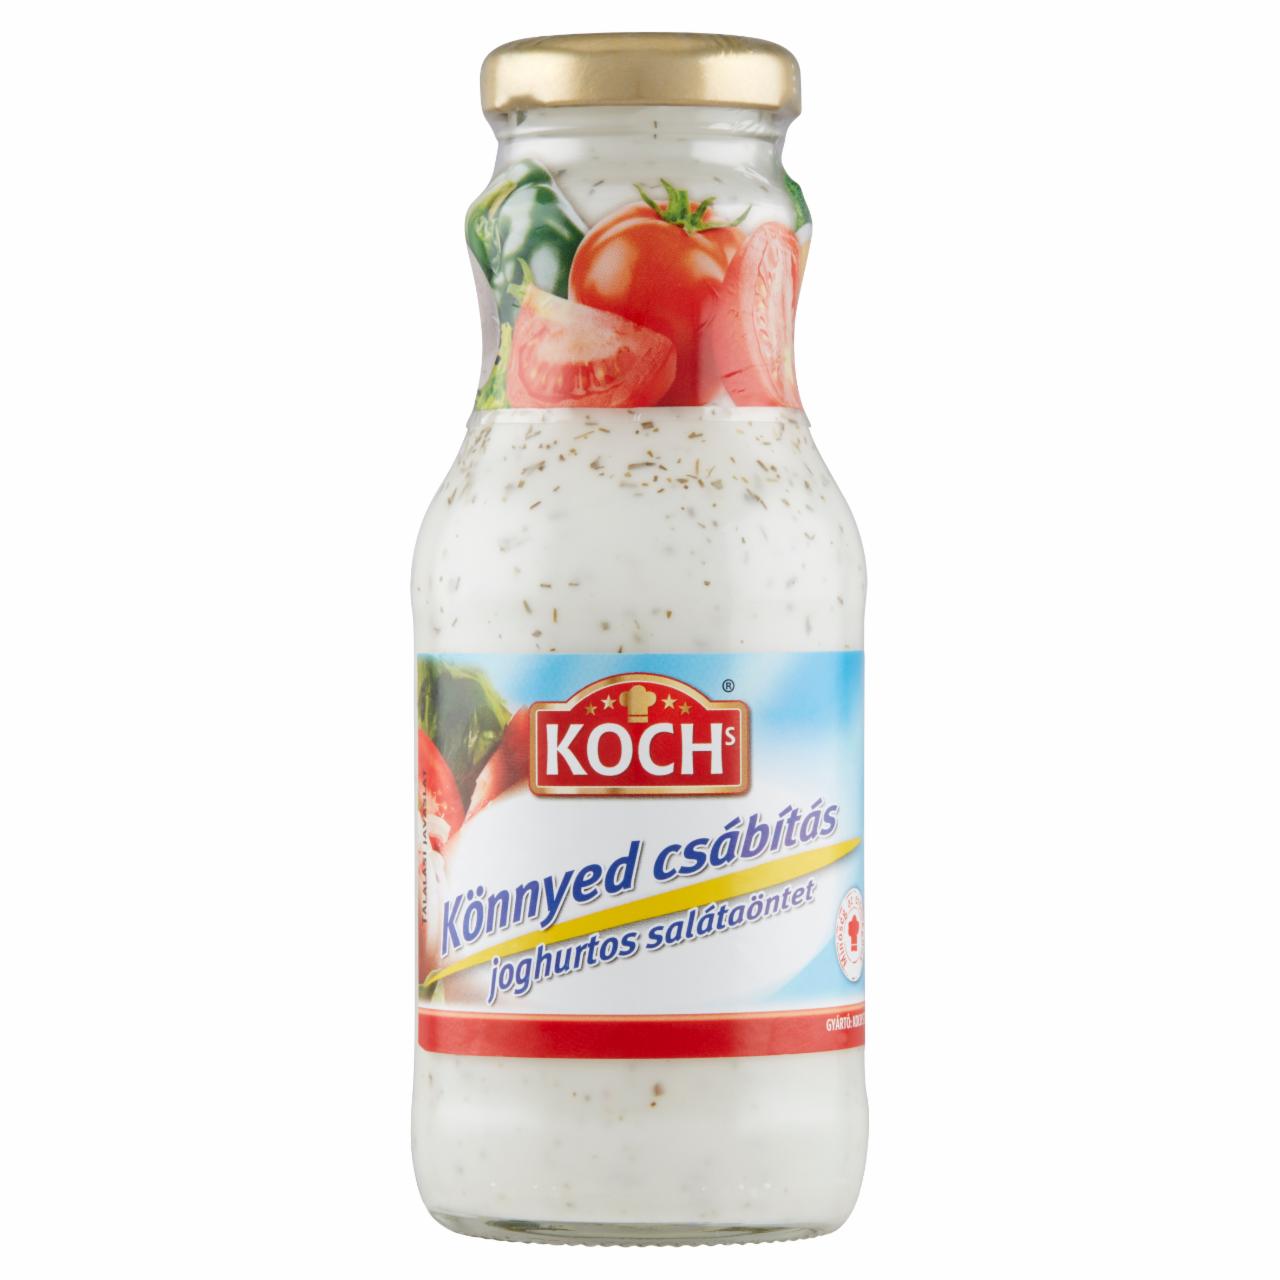 Képek - Koch's Könnyed Csábítás joghurtos salátaöntet 250 ml